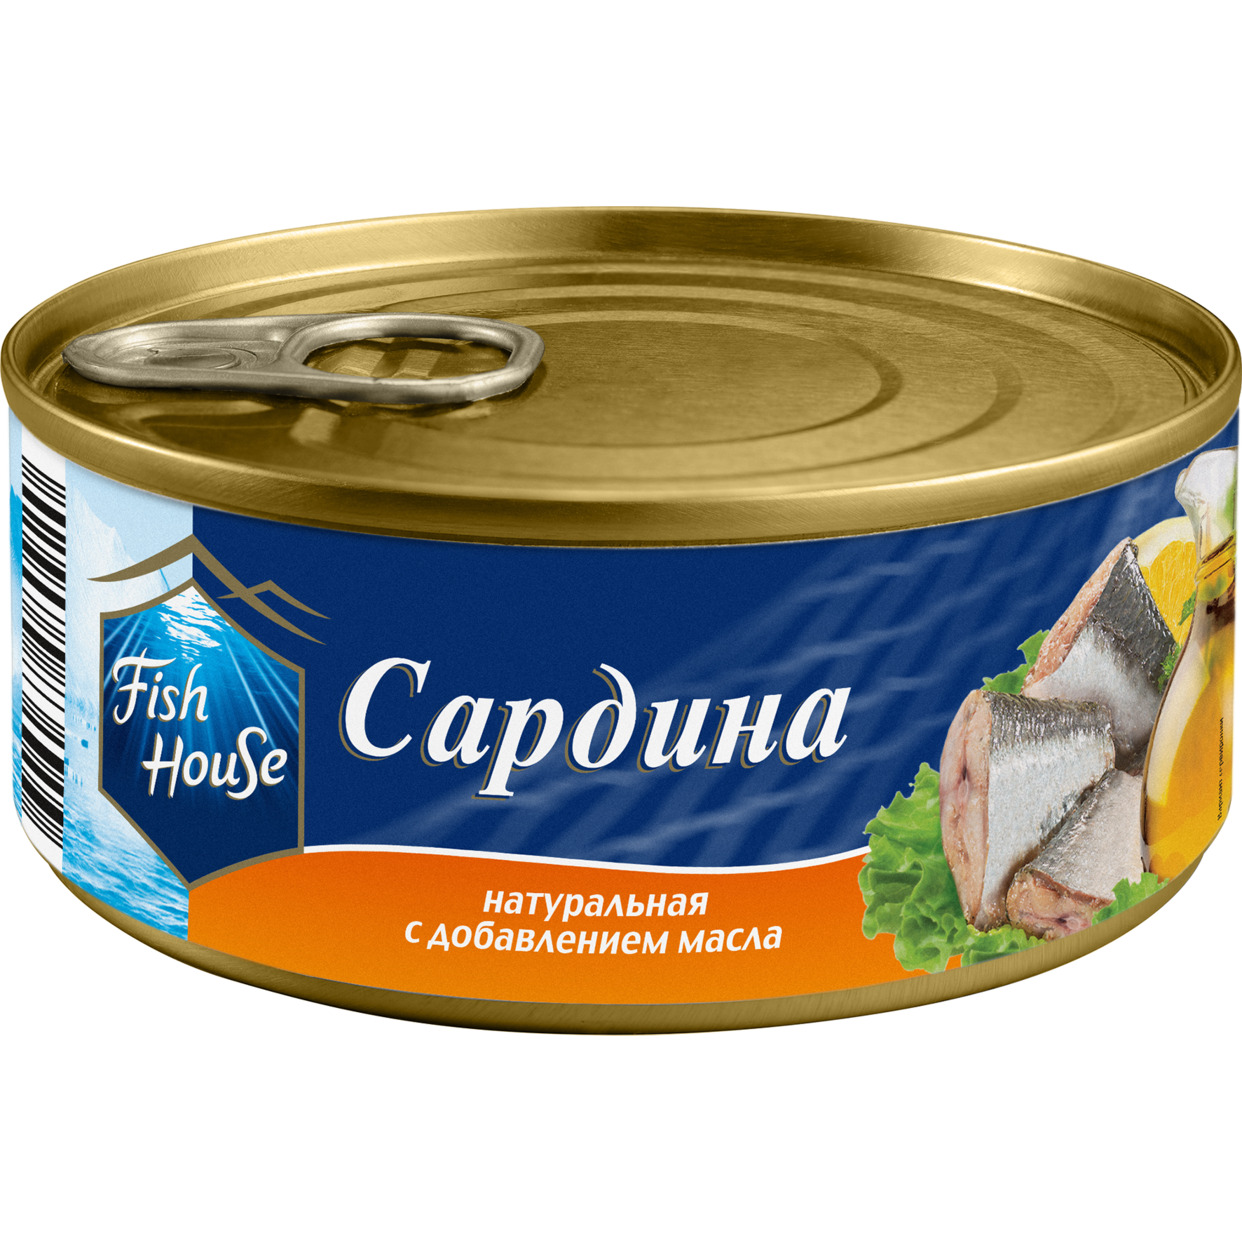 Сардина FISH HOUSE тихоокеанская натуральная с добавлением масла 245г